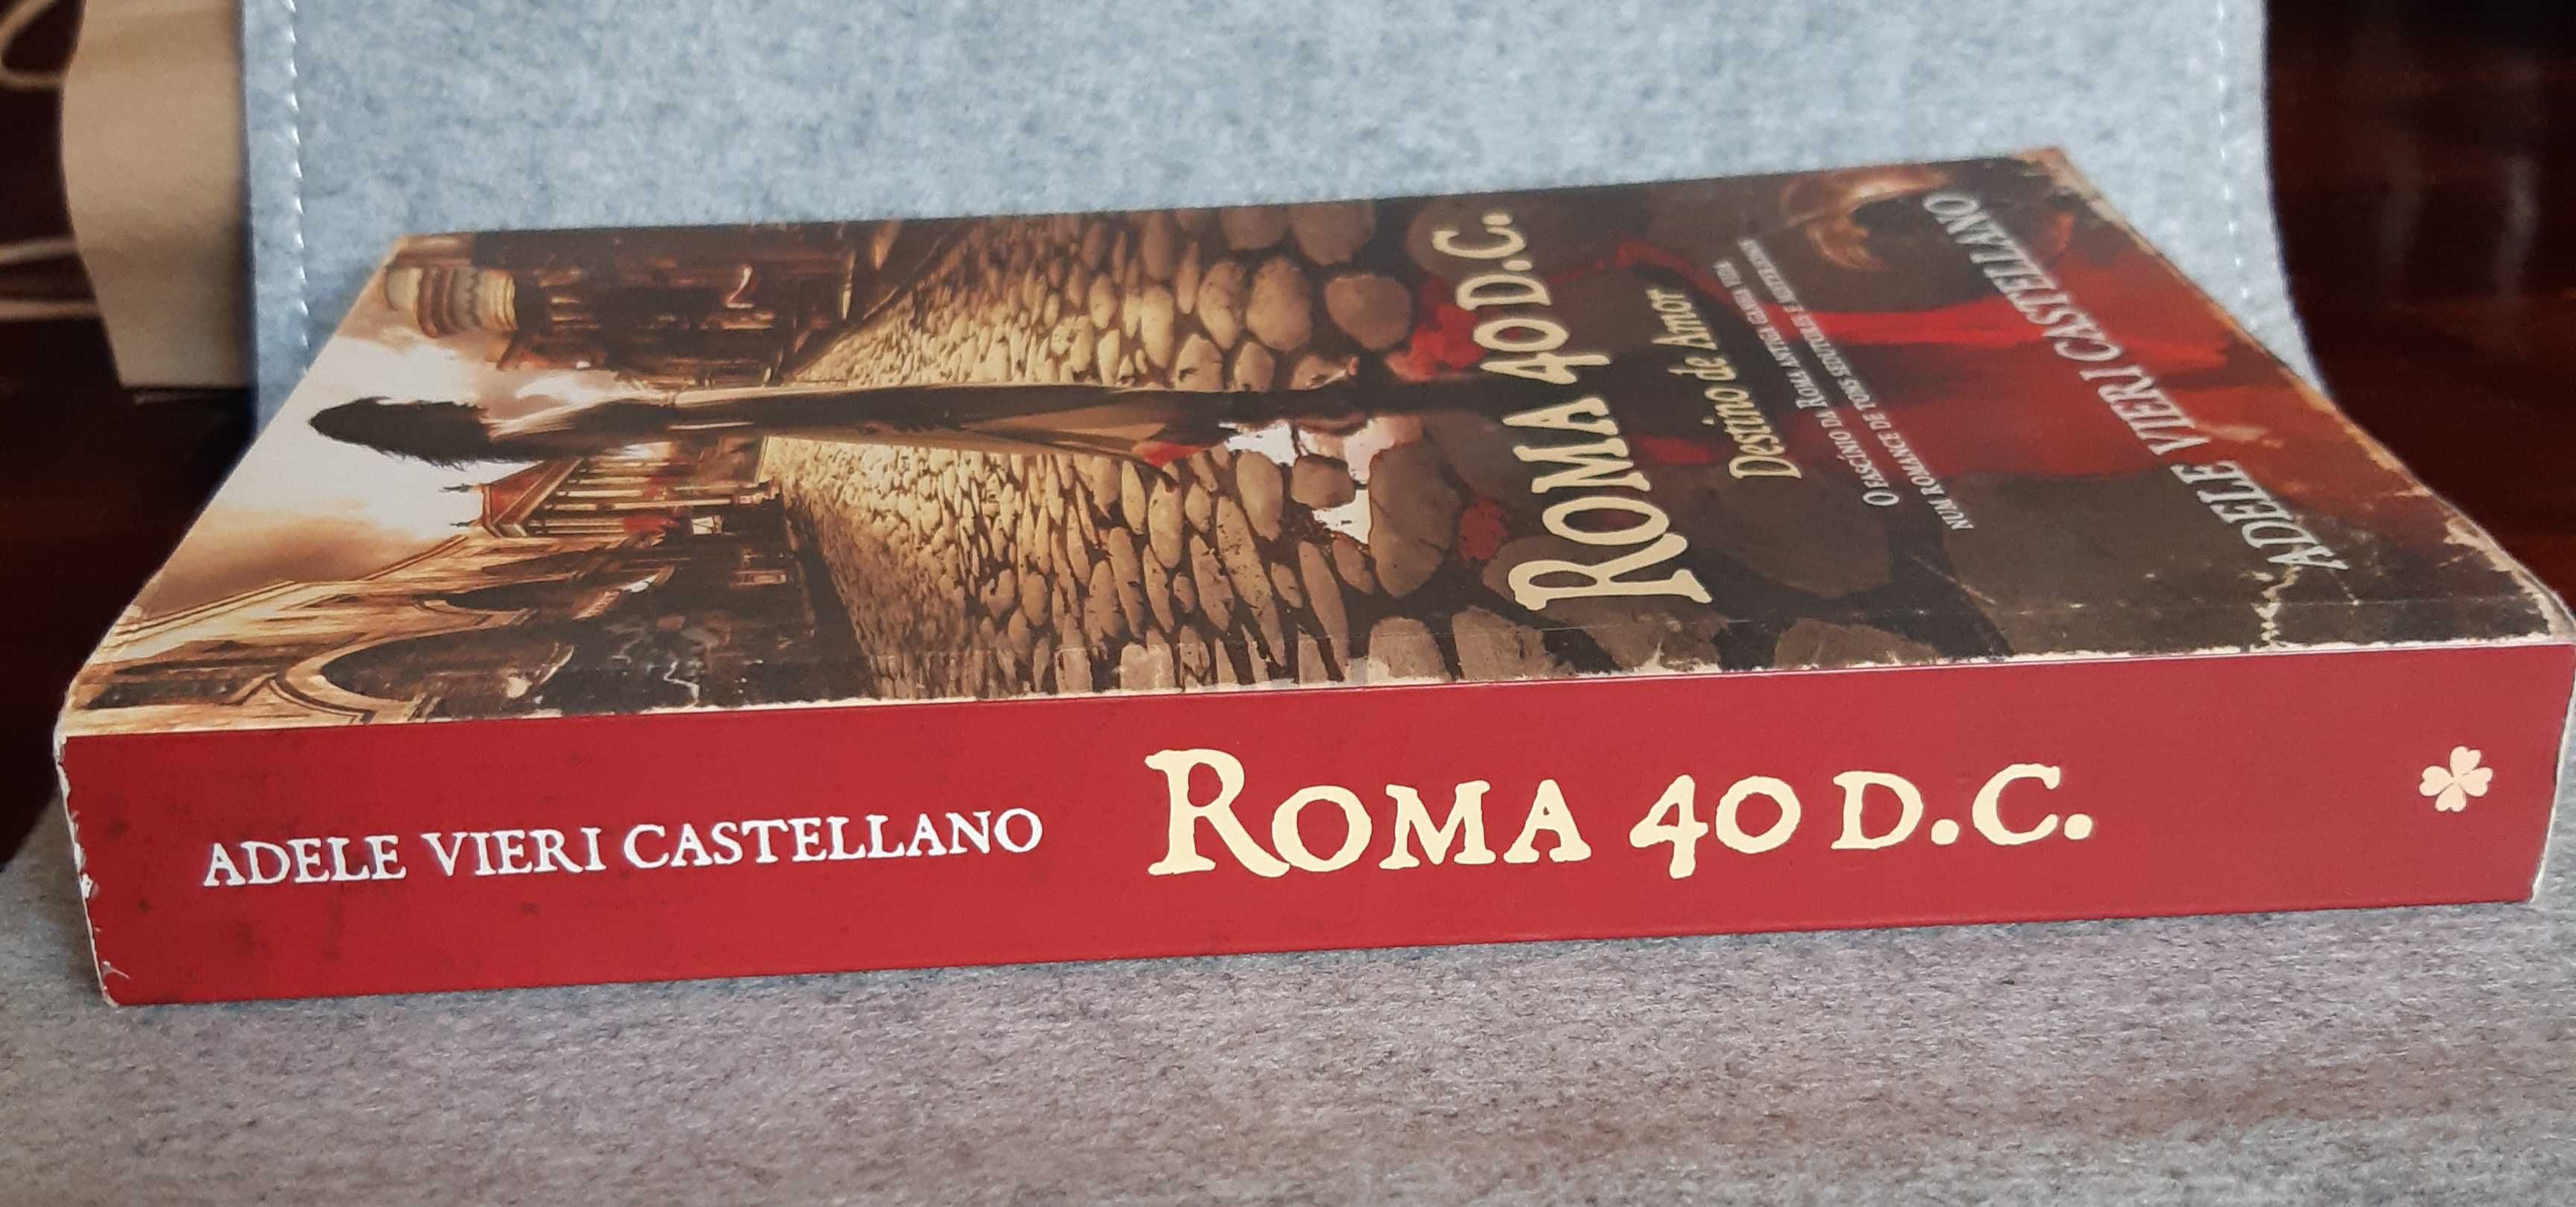 Roma 40 D.C. - Adele Vieri Castellano